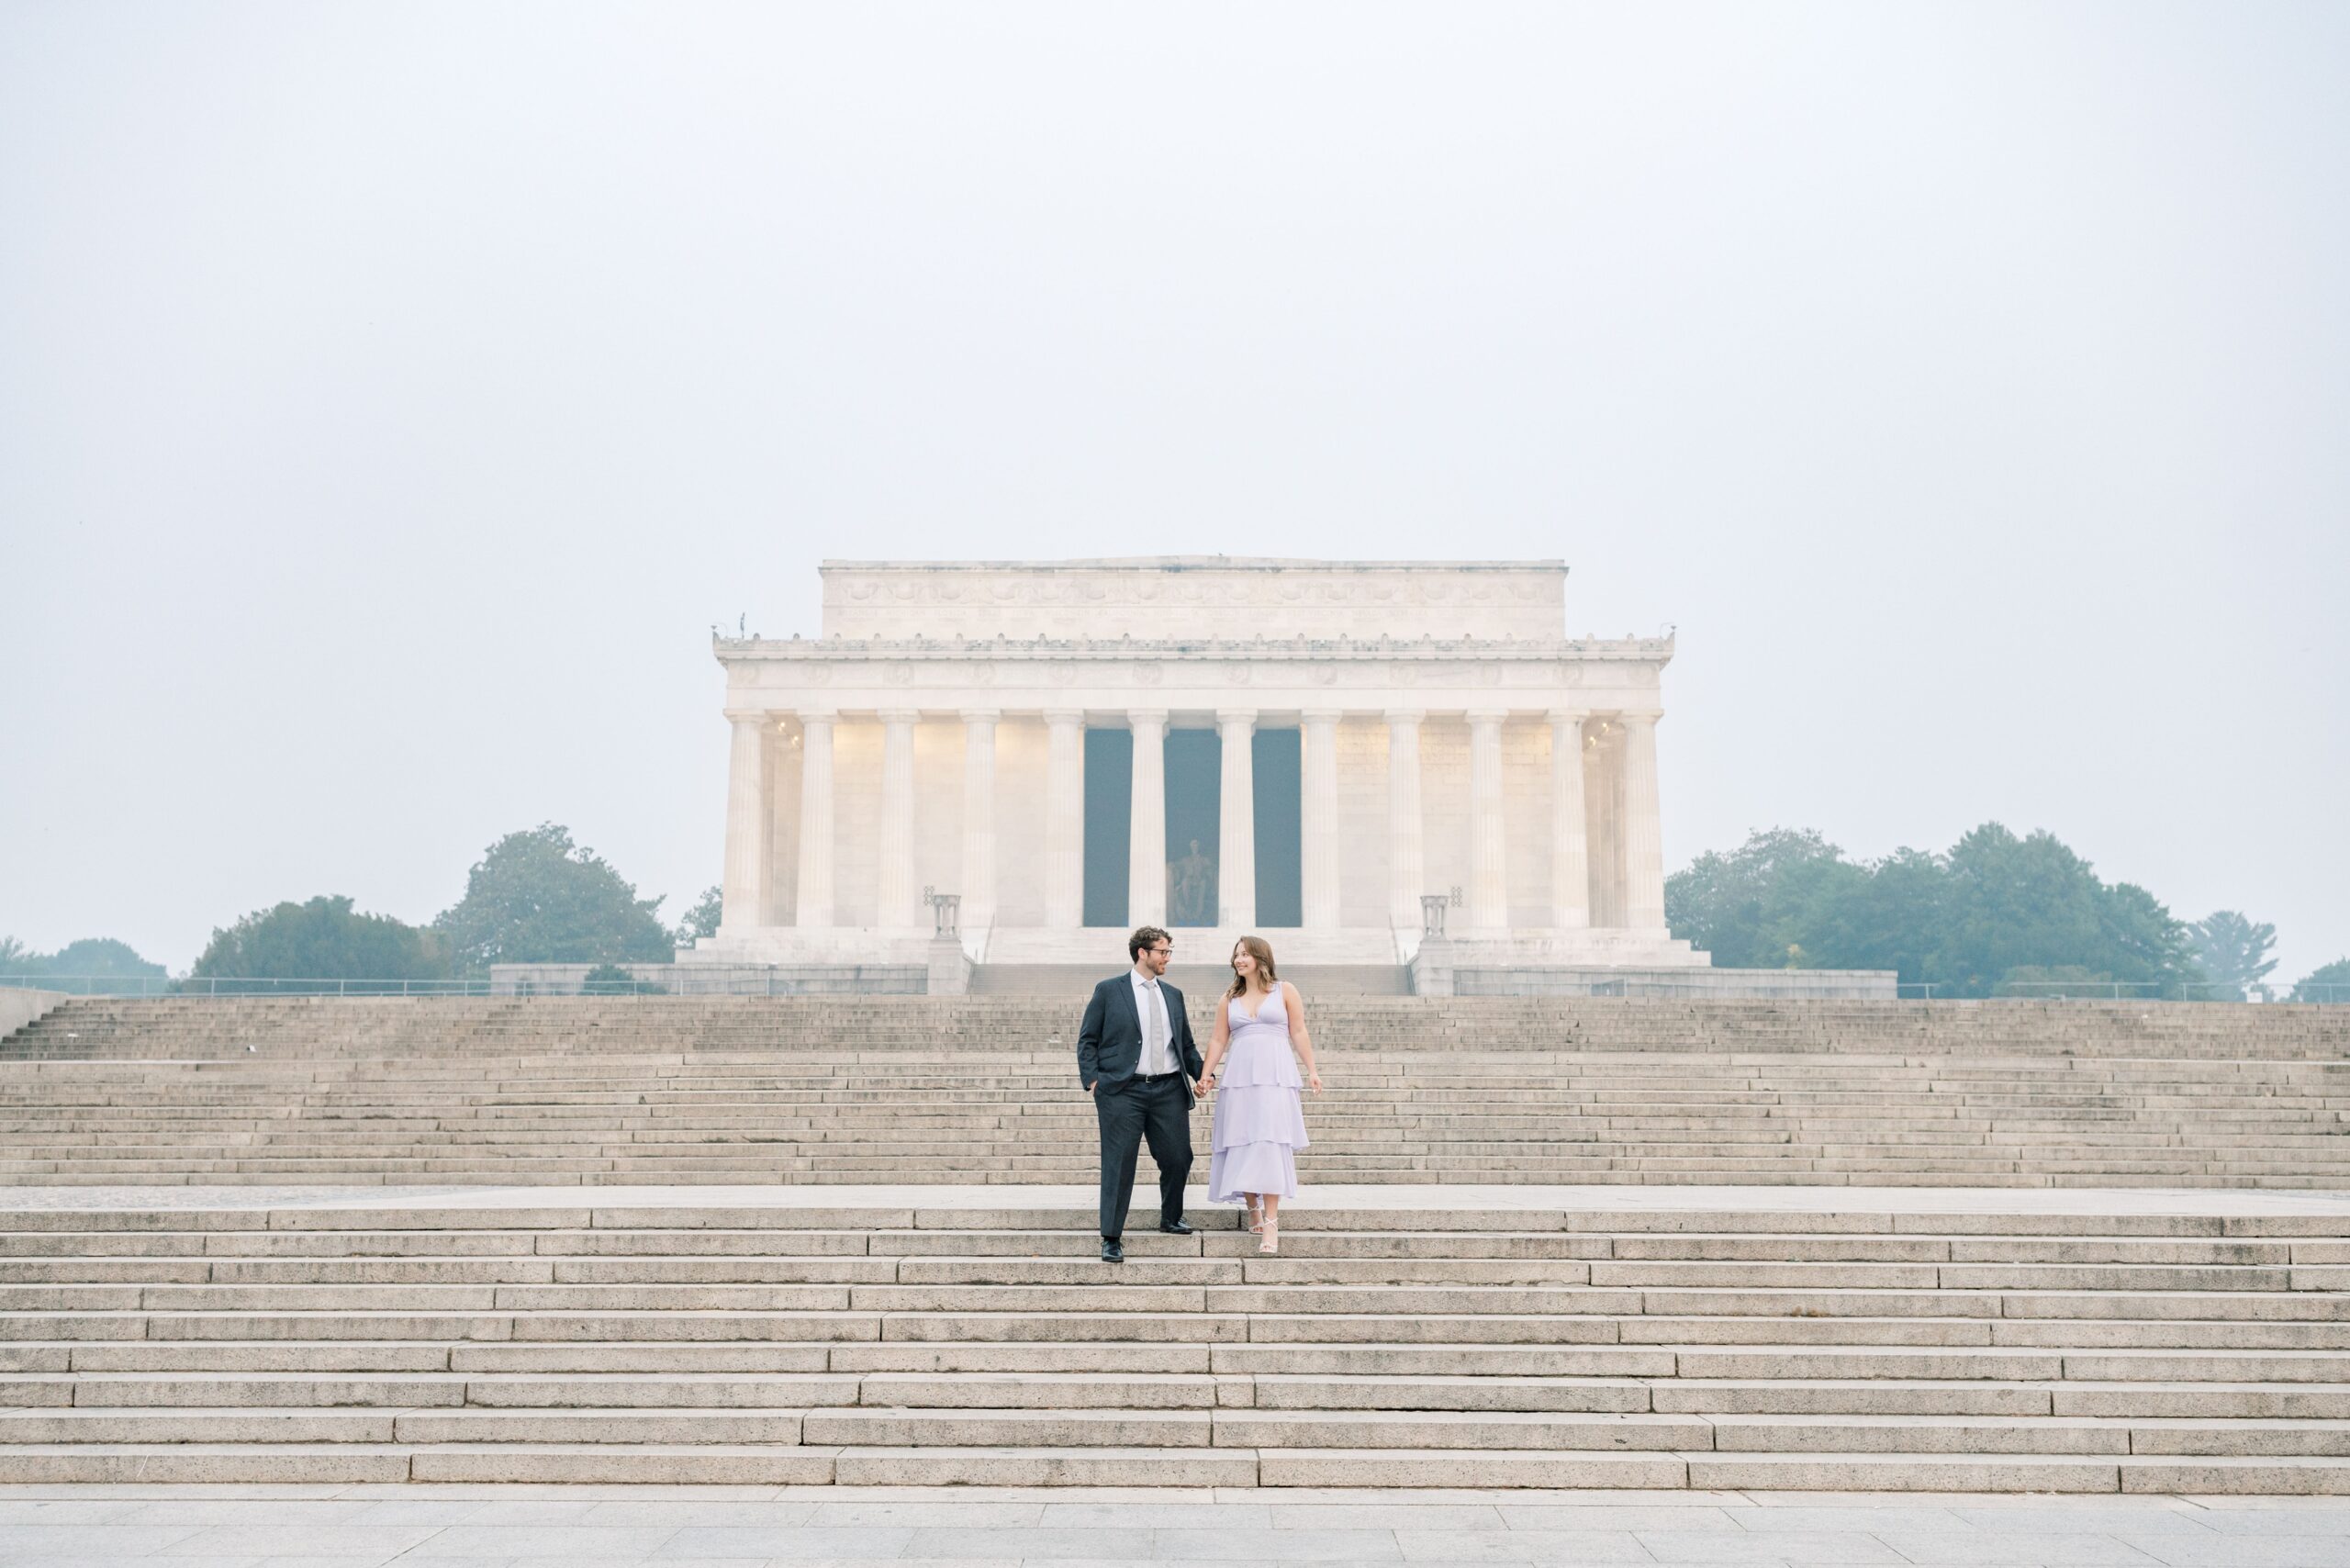 Hazy Washington Monument and Lincoln Memorial engagement photos in Washington, DC.